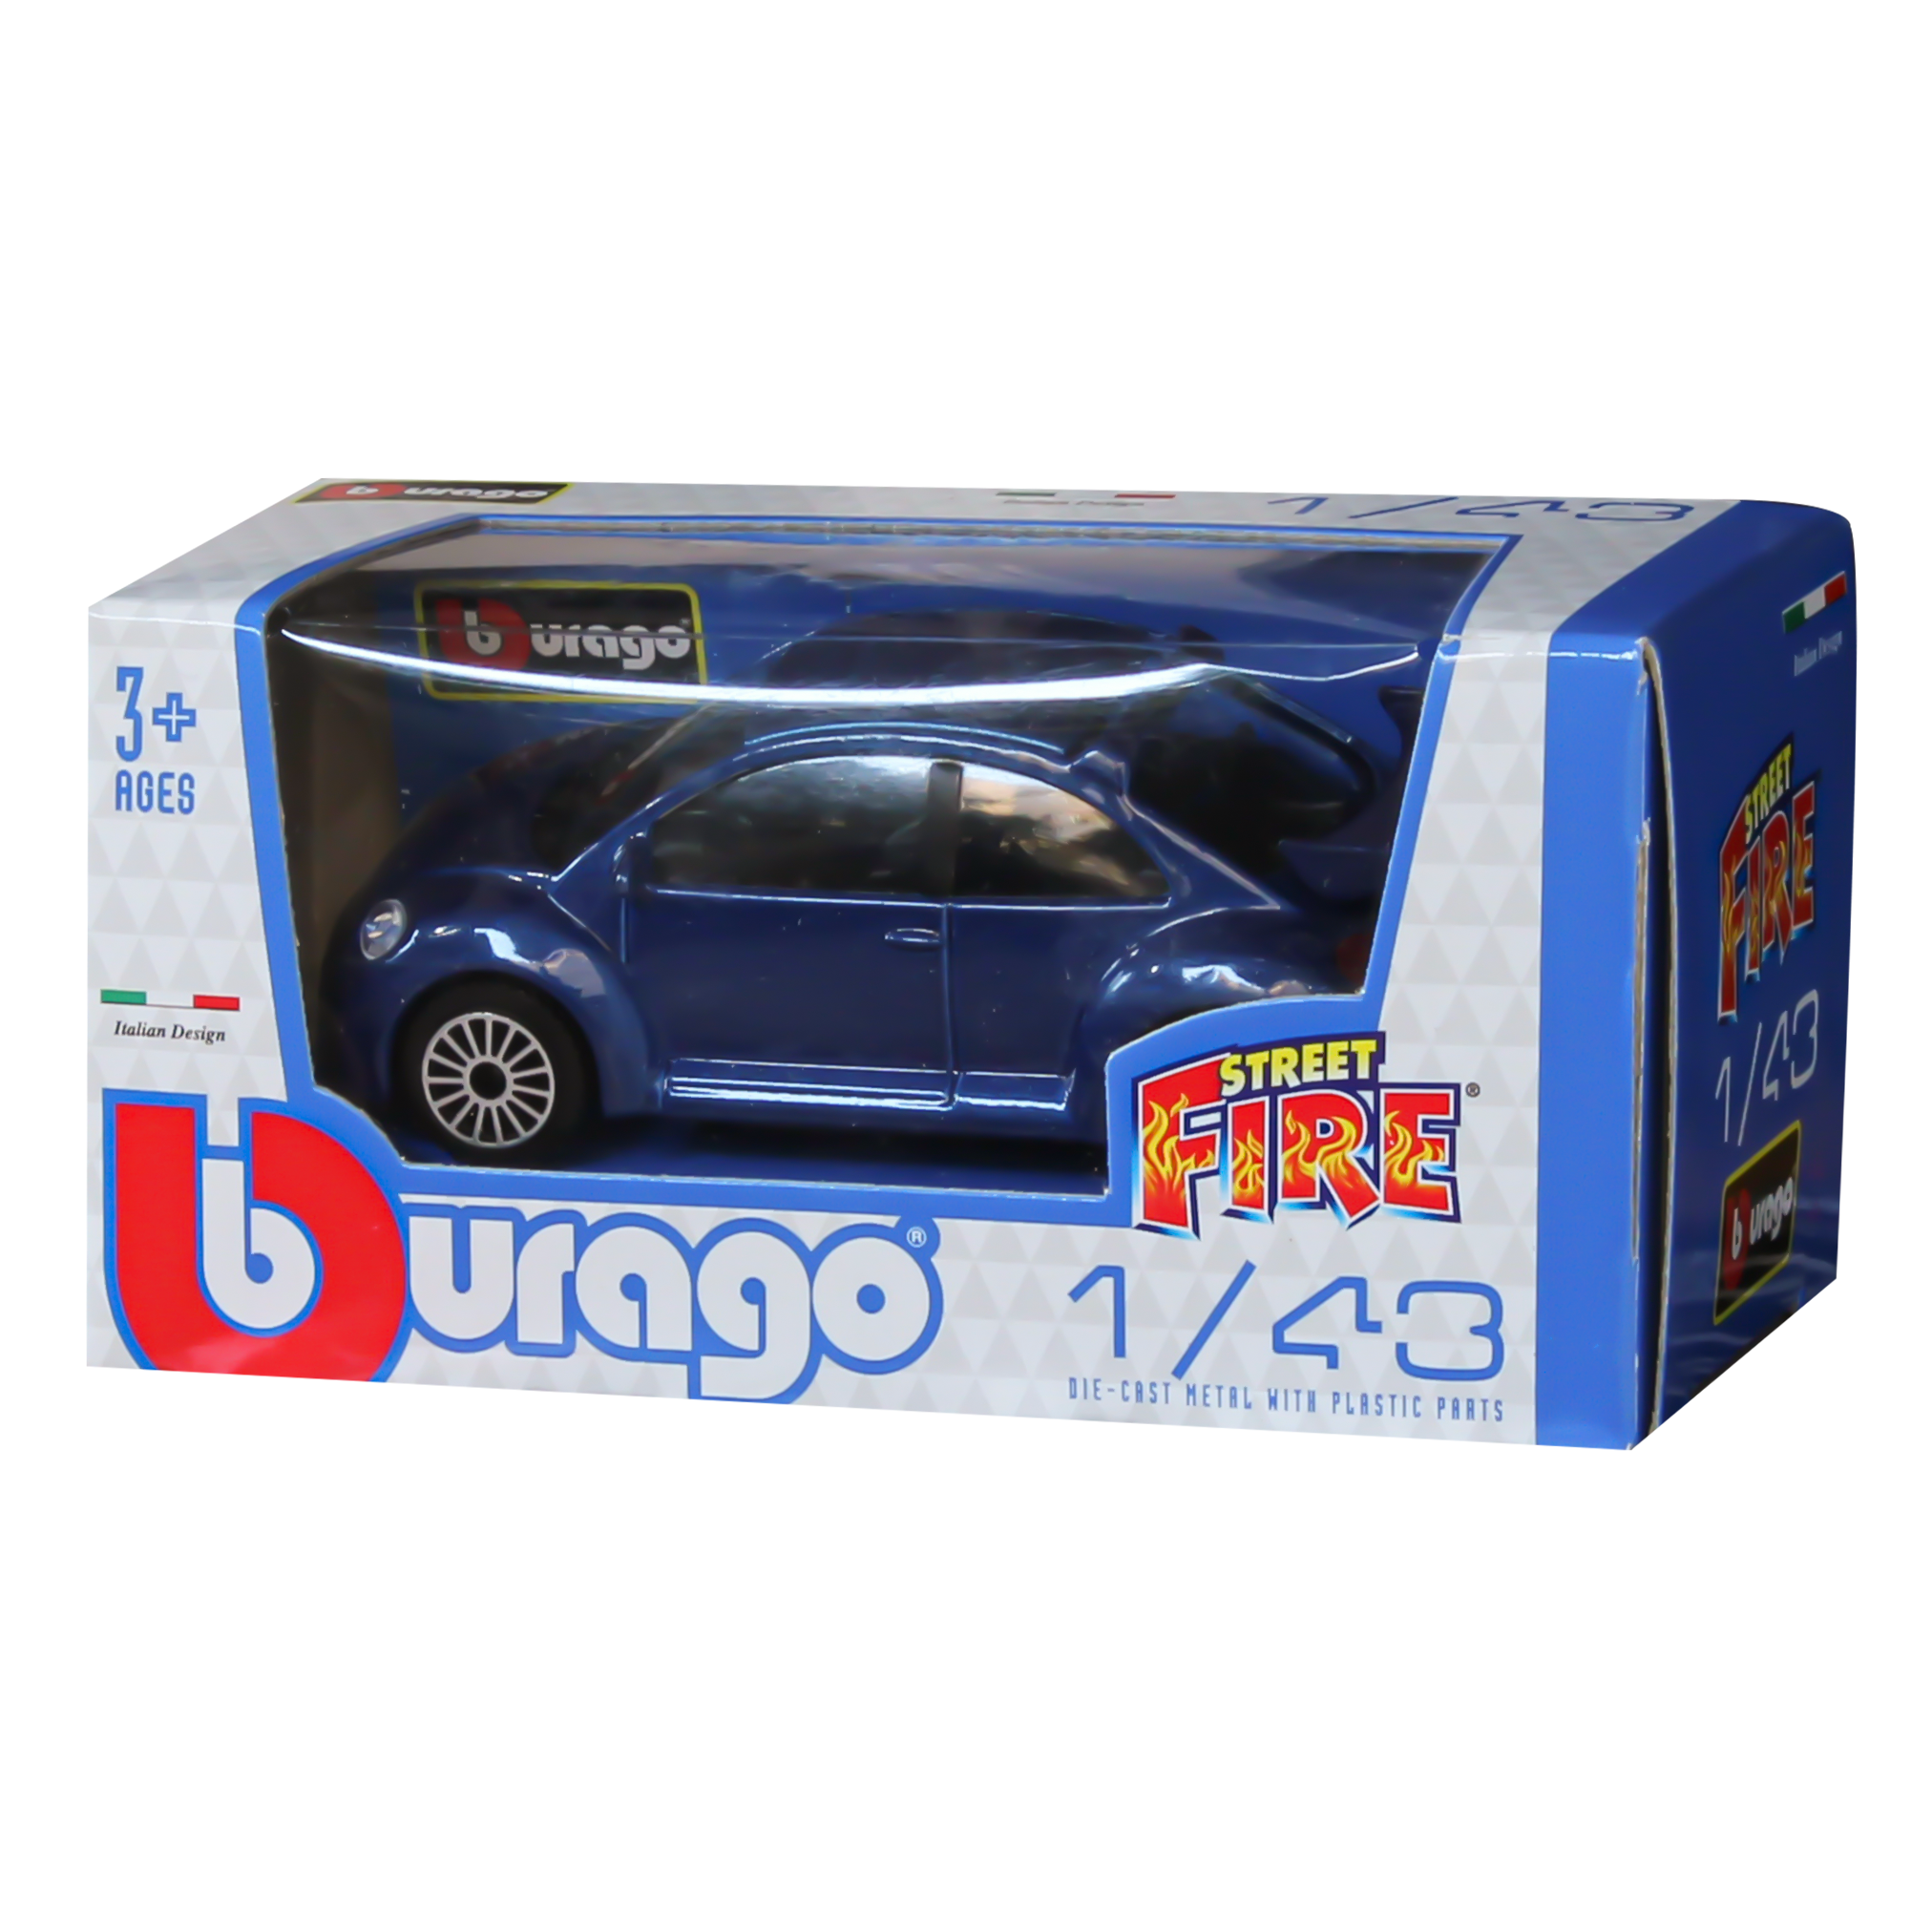 Burago Fire Street Car - فولكس واجن نيو بيتل RSI